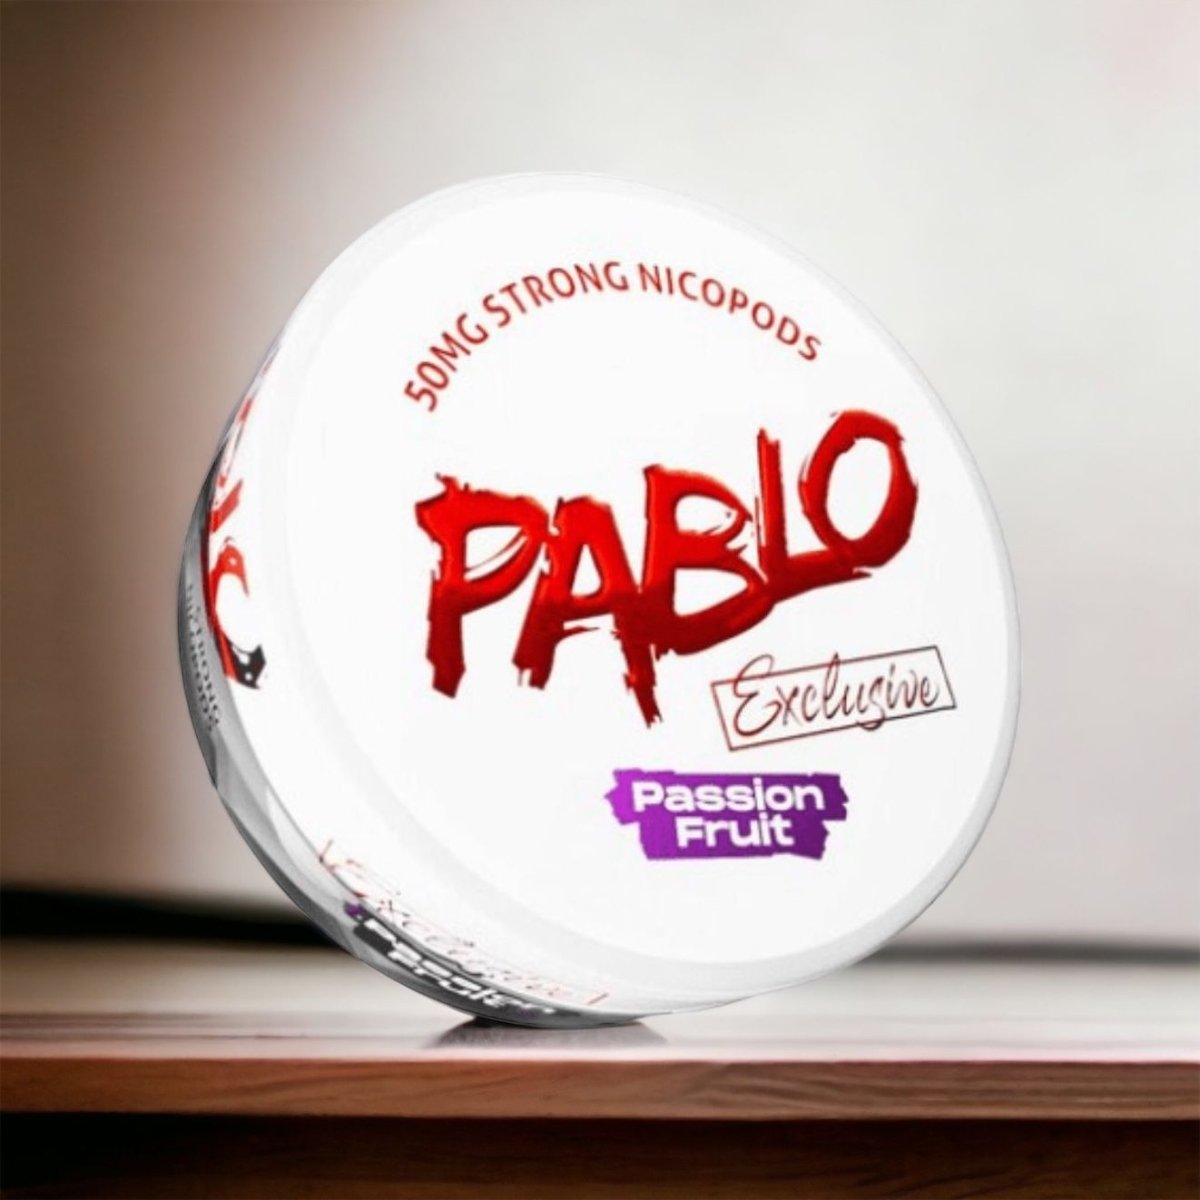 Pablo Nicopods - 5% - Box of 10 - Best Vape Wholesale